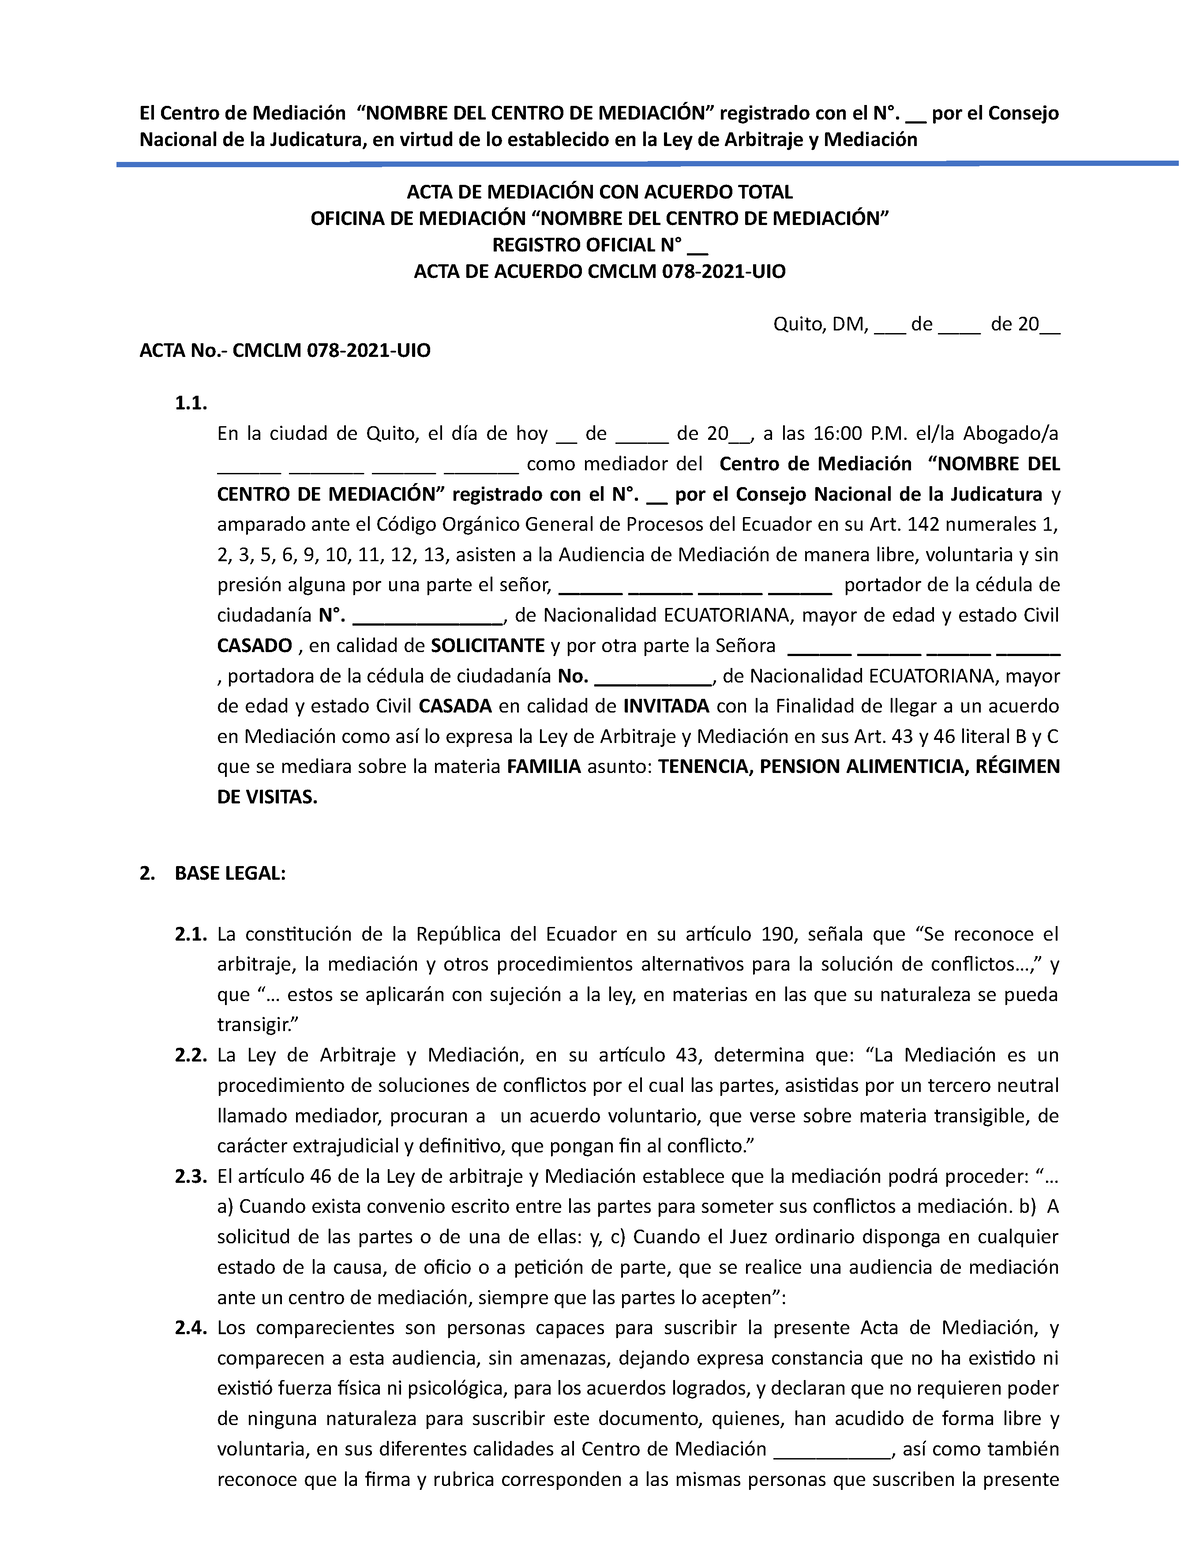 4 Modelo Acta De Mediacion Materia Familia Asunto Tenencia Pension Alimenticia Regimen De 9934